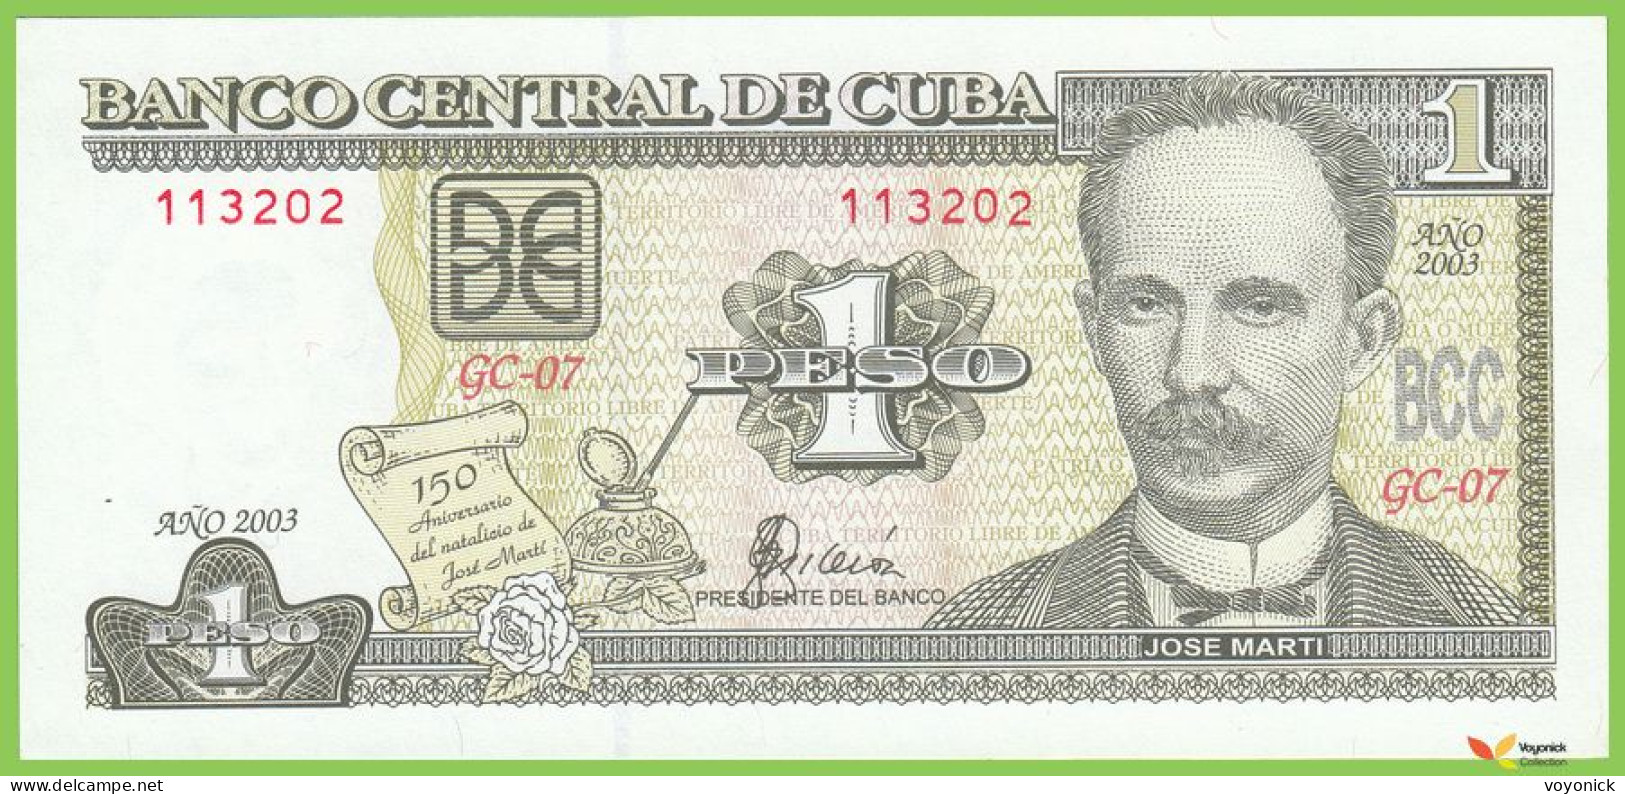 Voyo CUBA 1 Peso 2003 P125 B913a GC-07 UNC Commemorative - Kuba